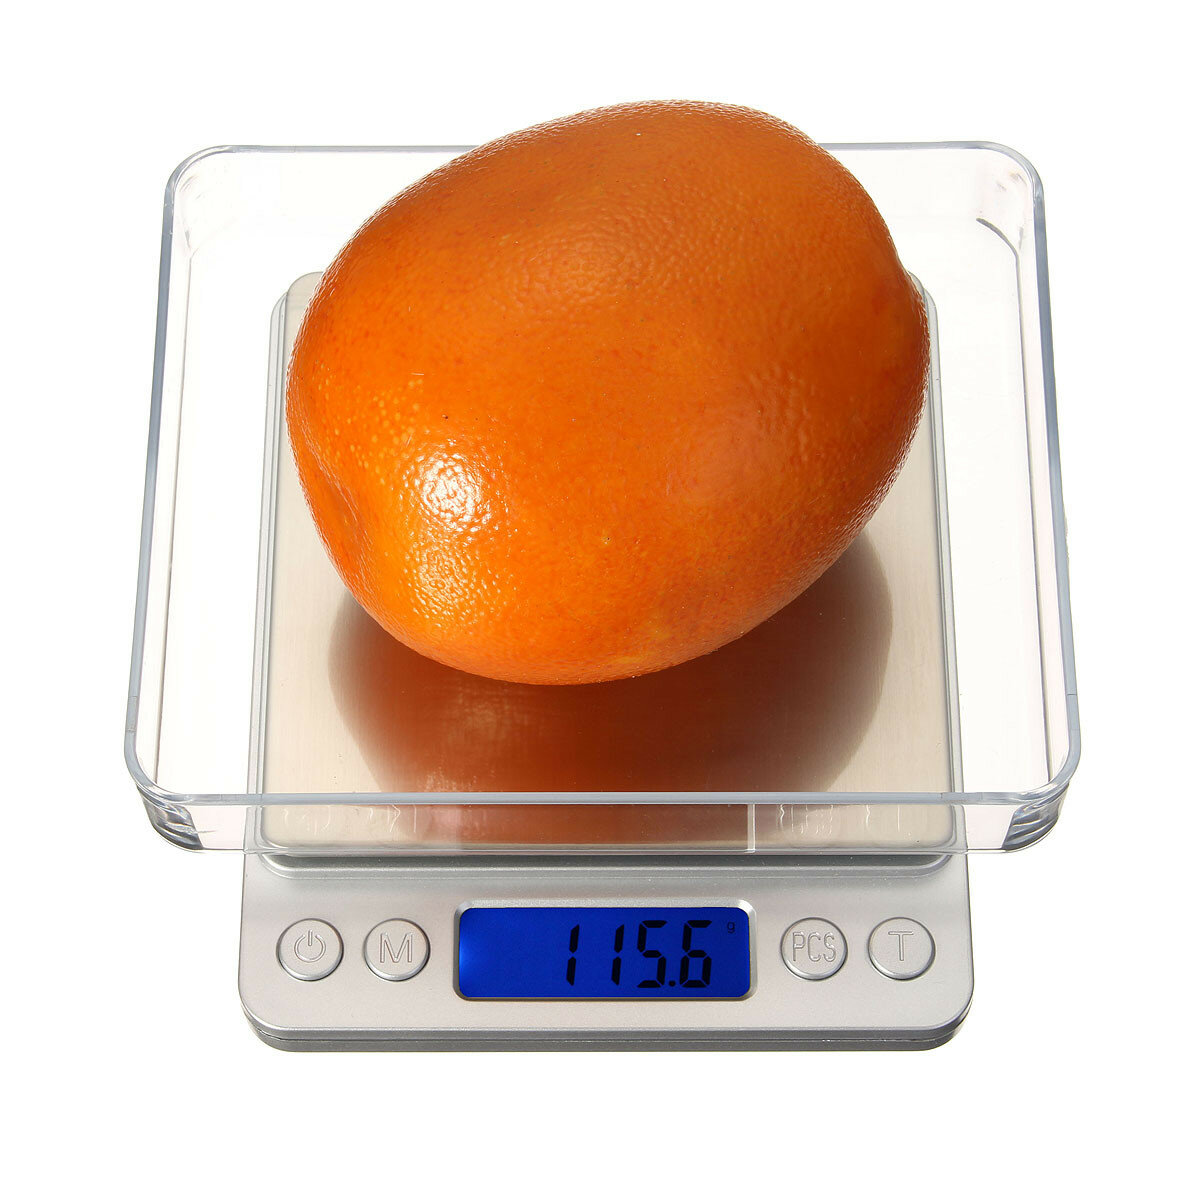 DANIU 3000g 0.1g Digital Pocket Scale Electronic Scale Weight Scale Balance